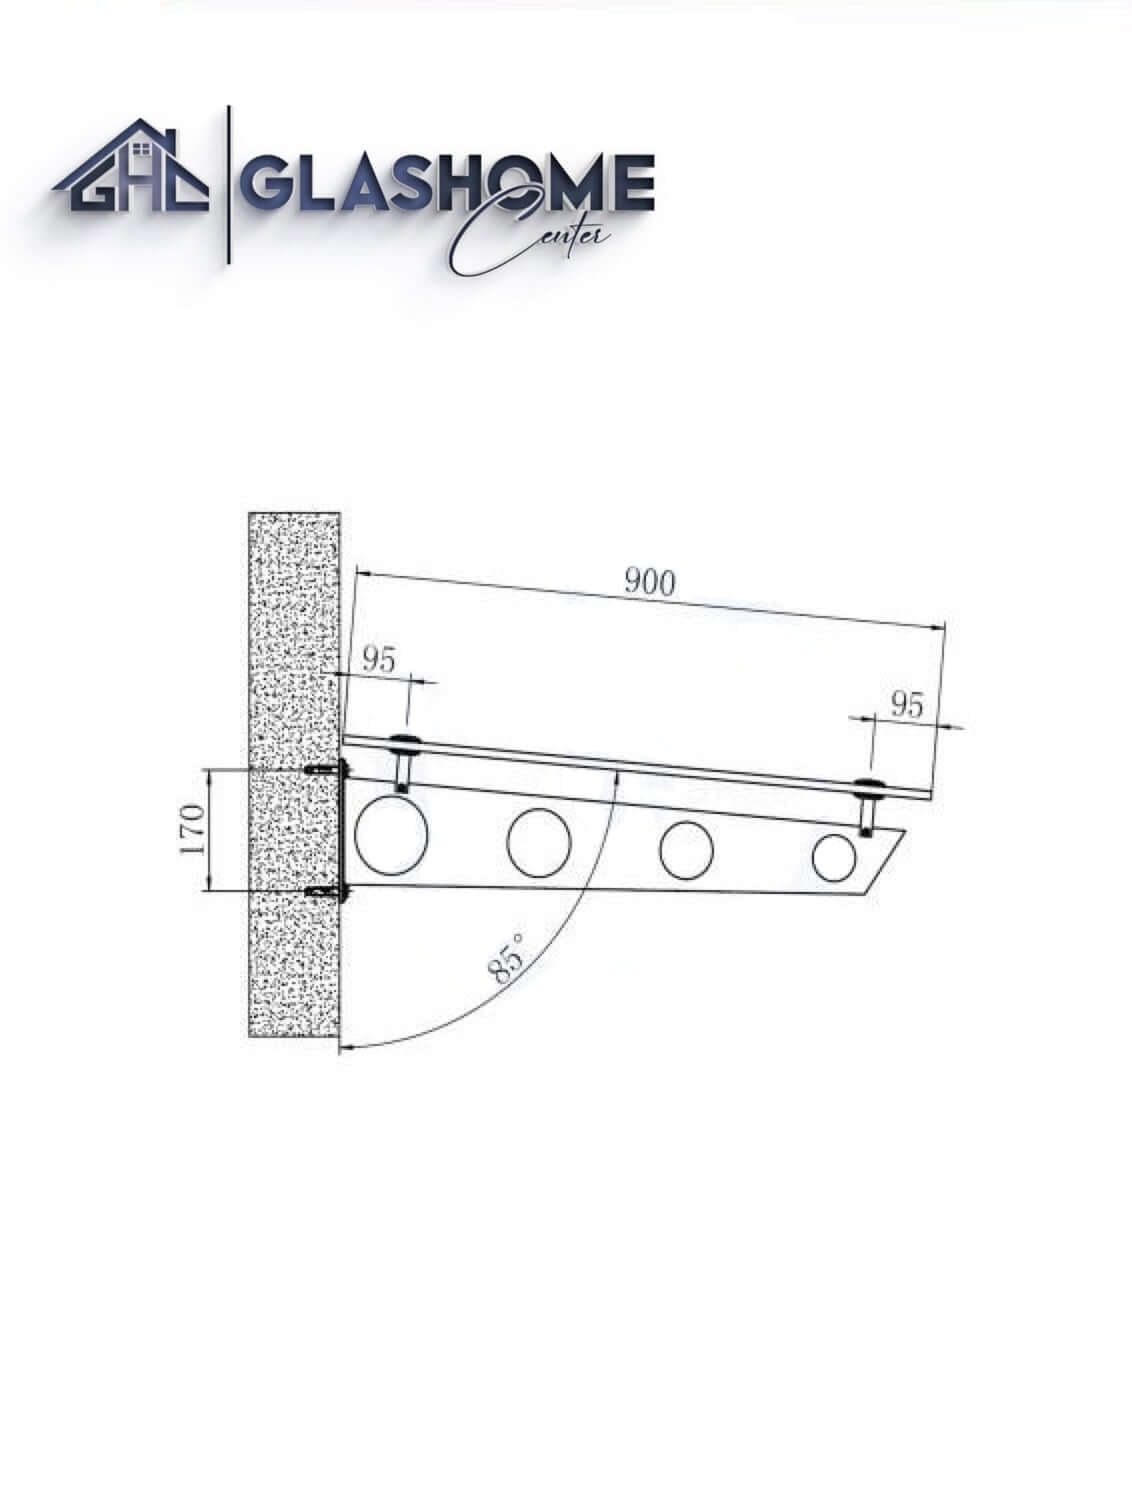 GlasHomeCenter - glass canopy - Clear glass - 230x90cm - 13.1mm VSG - incl. 3 schwarze Edelstahlhalterungen Variante "Stockholm"